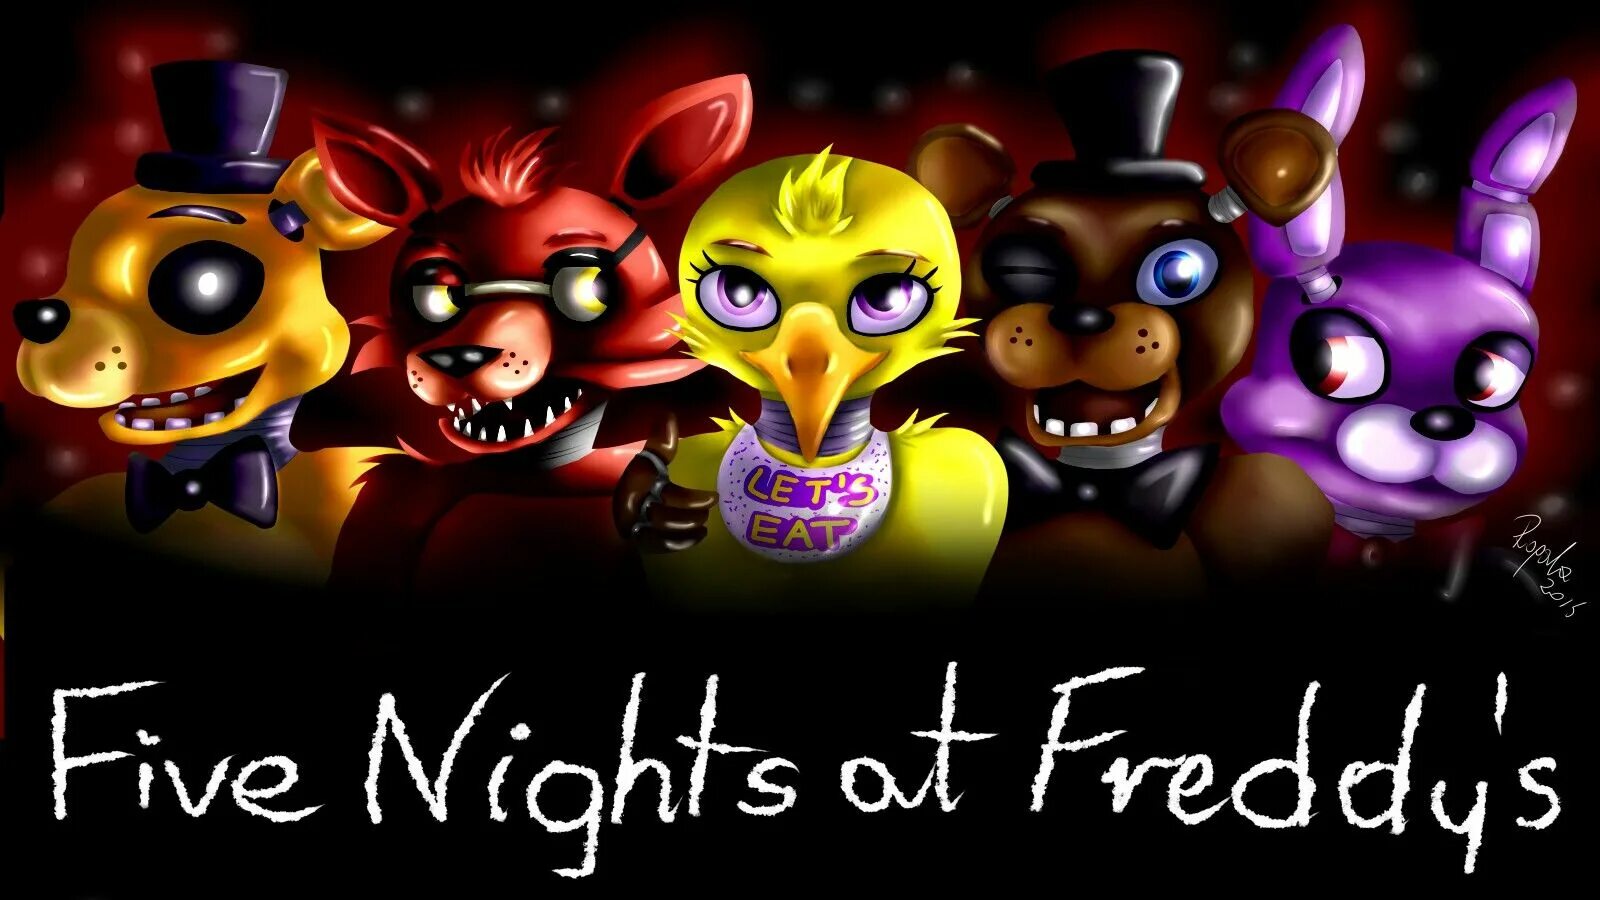 Фнаф уно. Фиве Нигхт АТ Фредди. ФНАФ 1. Файф Найт Фредди. Five Nights at Freddy's Фредди.